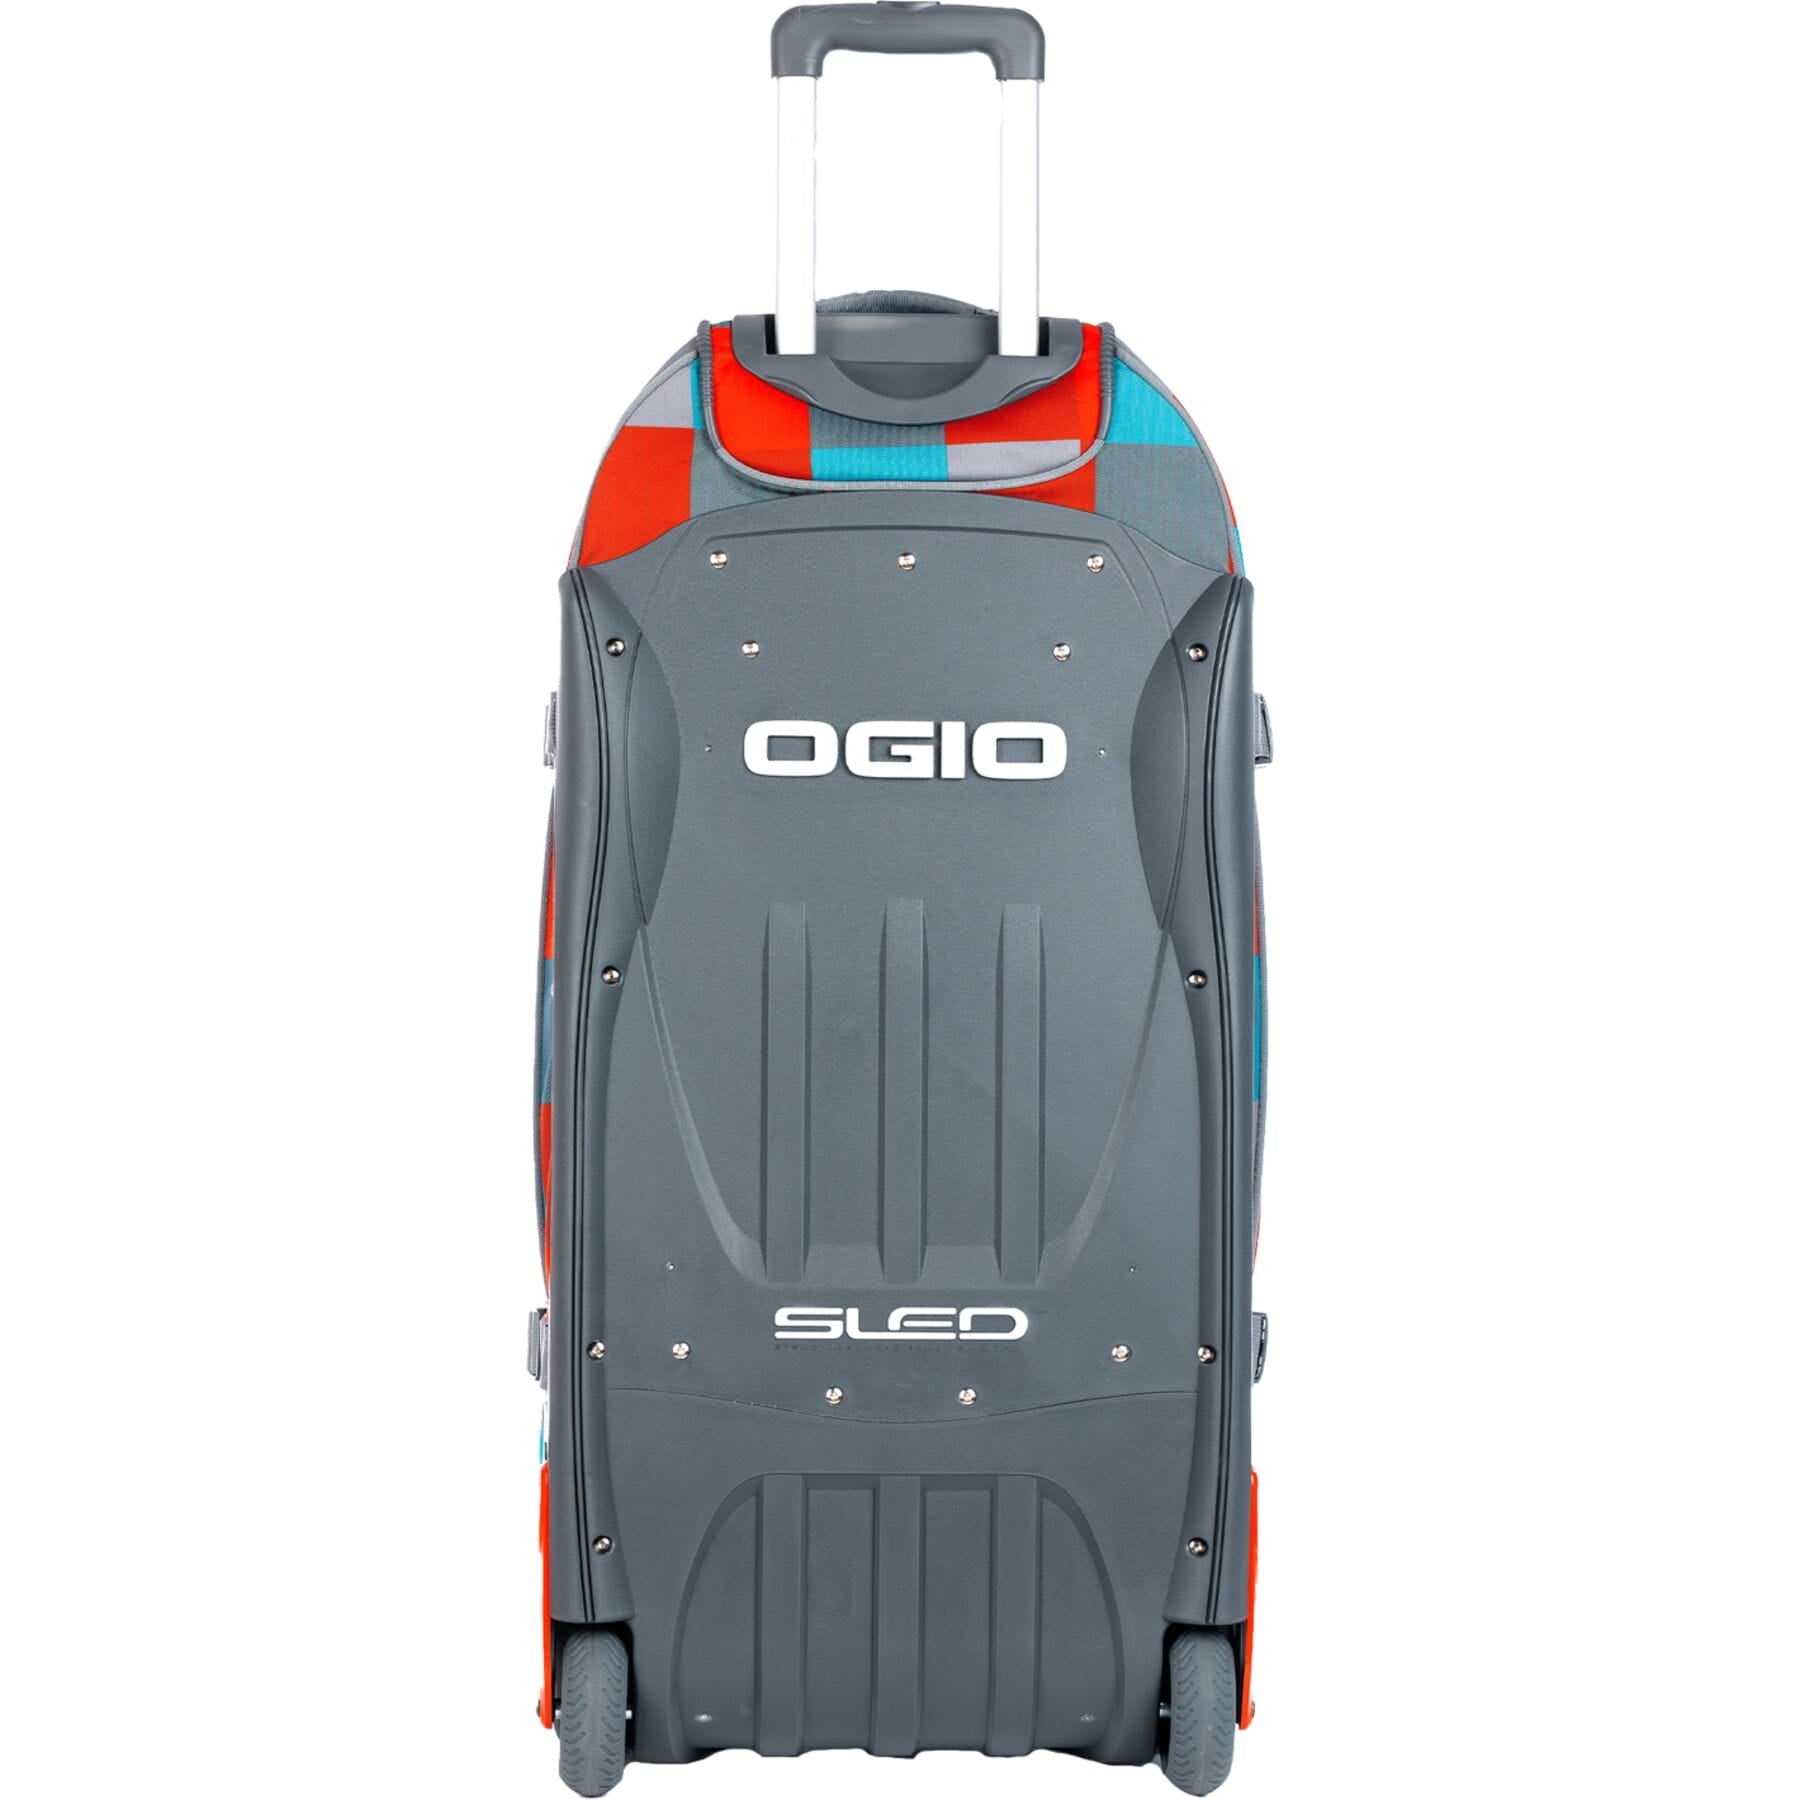 Ogio Rig 9800 PRO Gear Bag Blockade Red